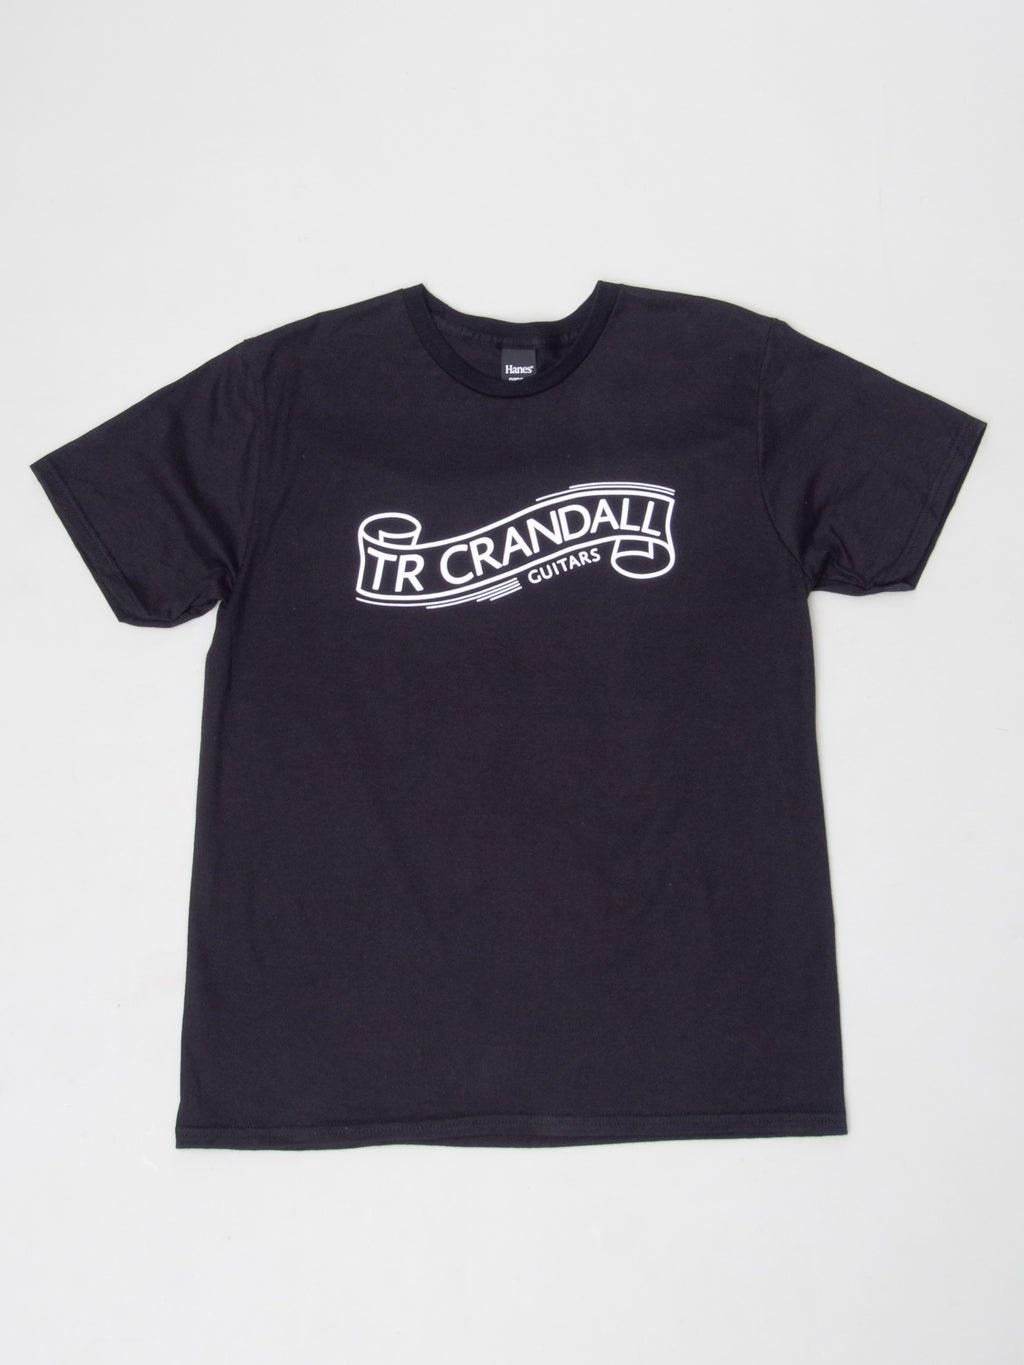 TR Crandall T-Shirt